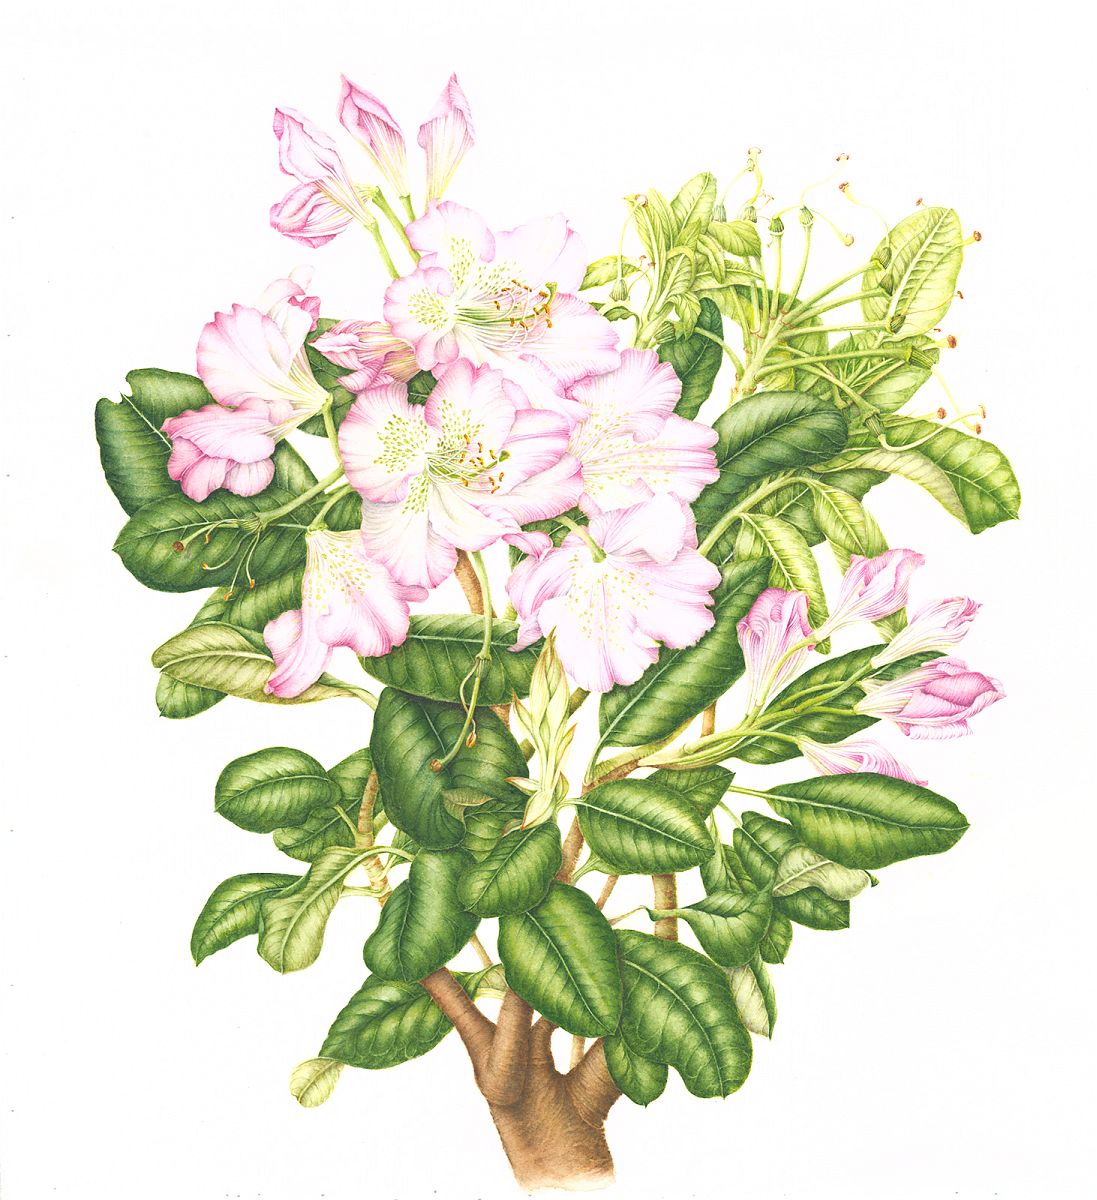 Rhododendron “scintillation”